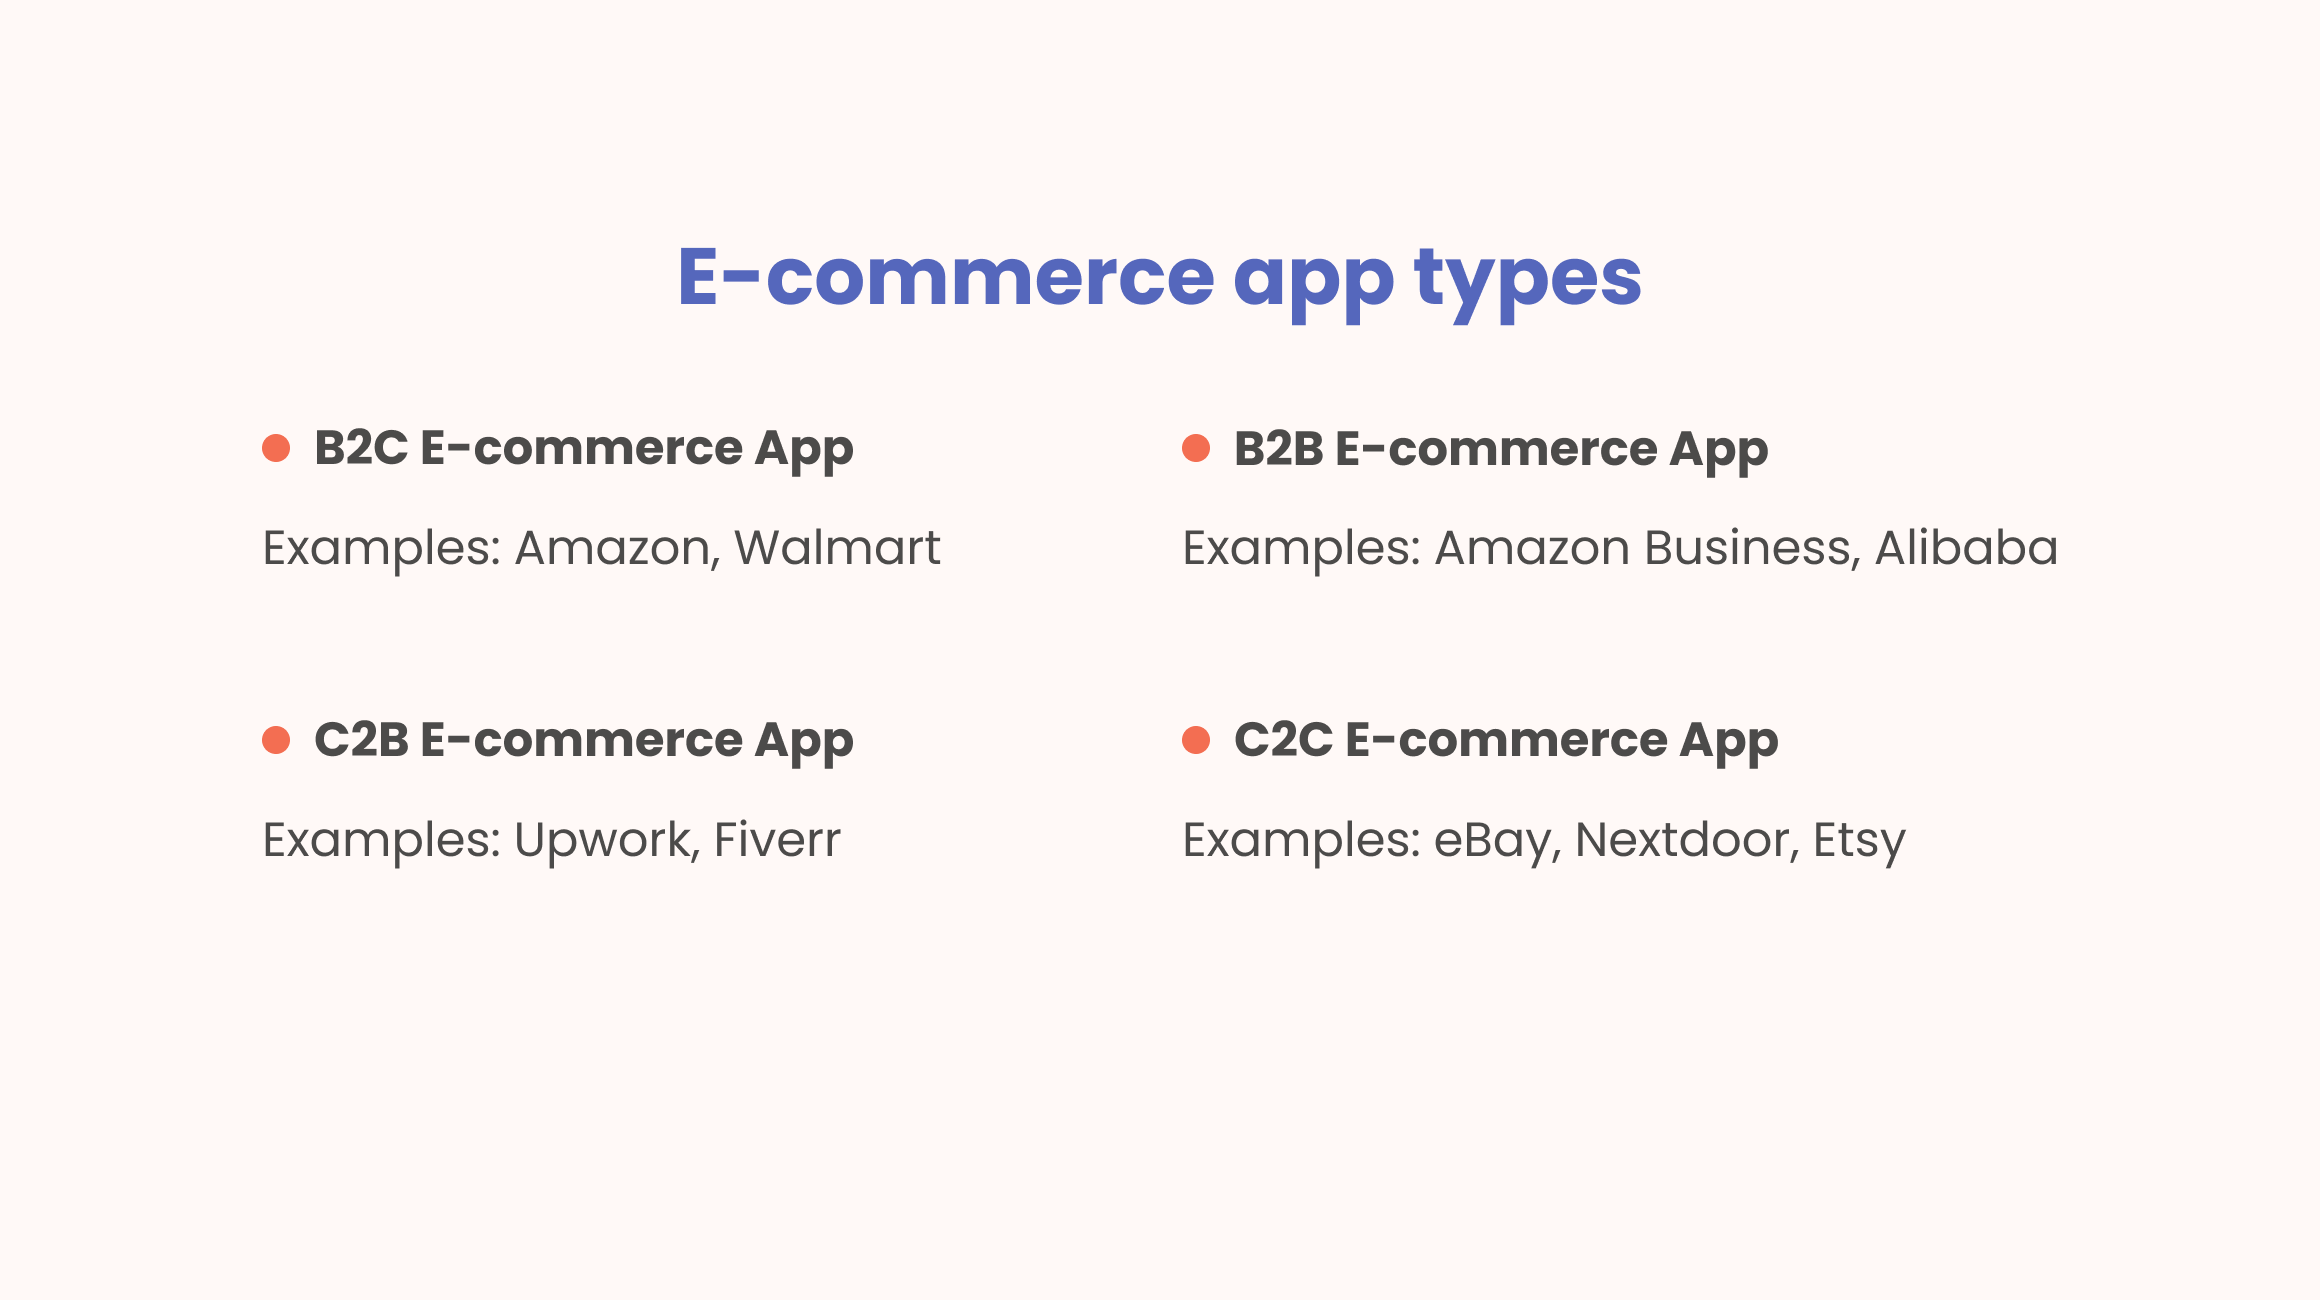 Types of e-commerce apps